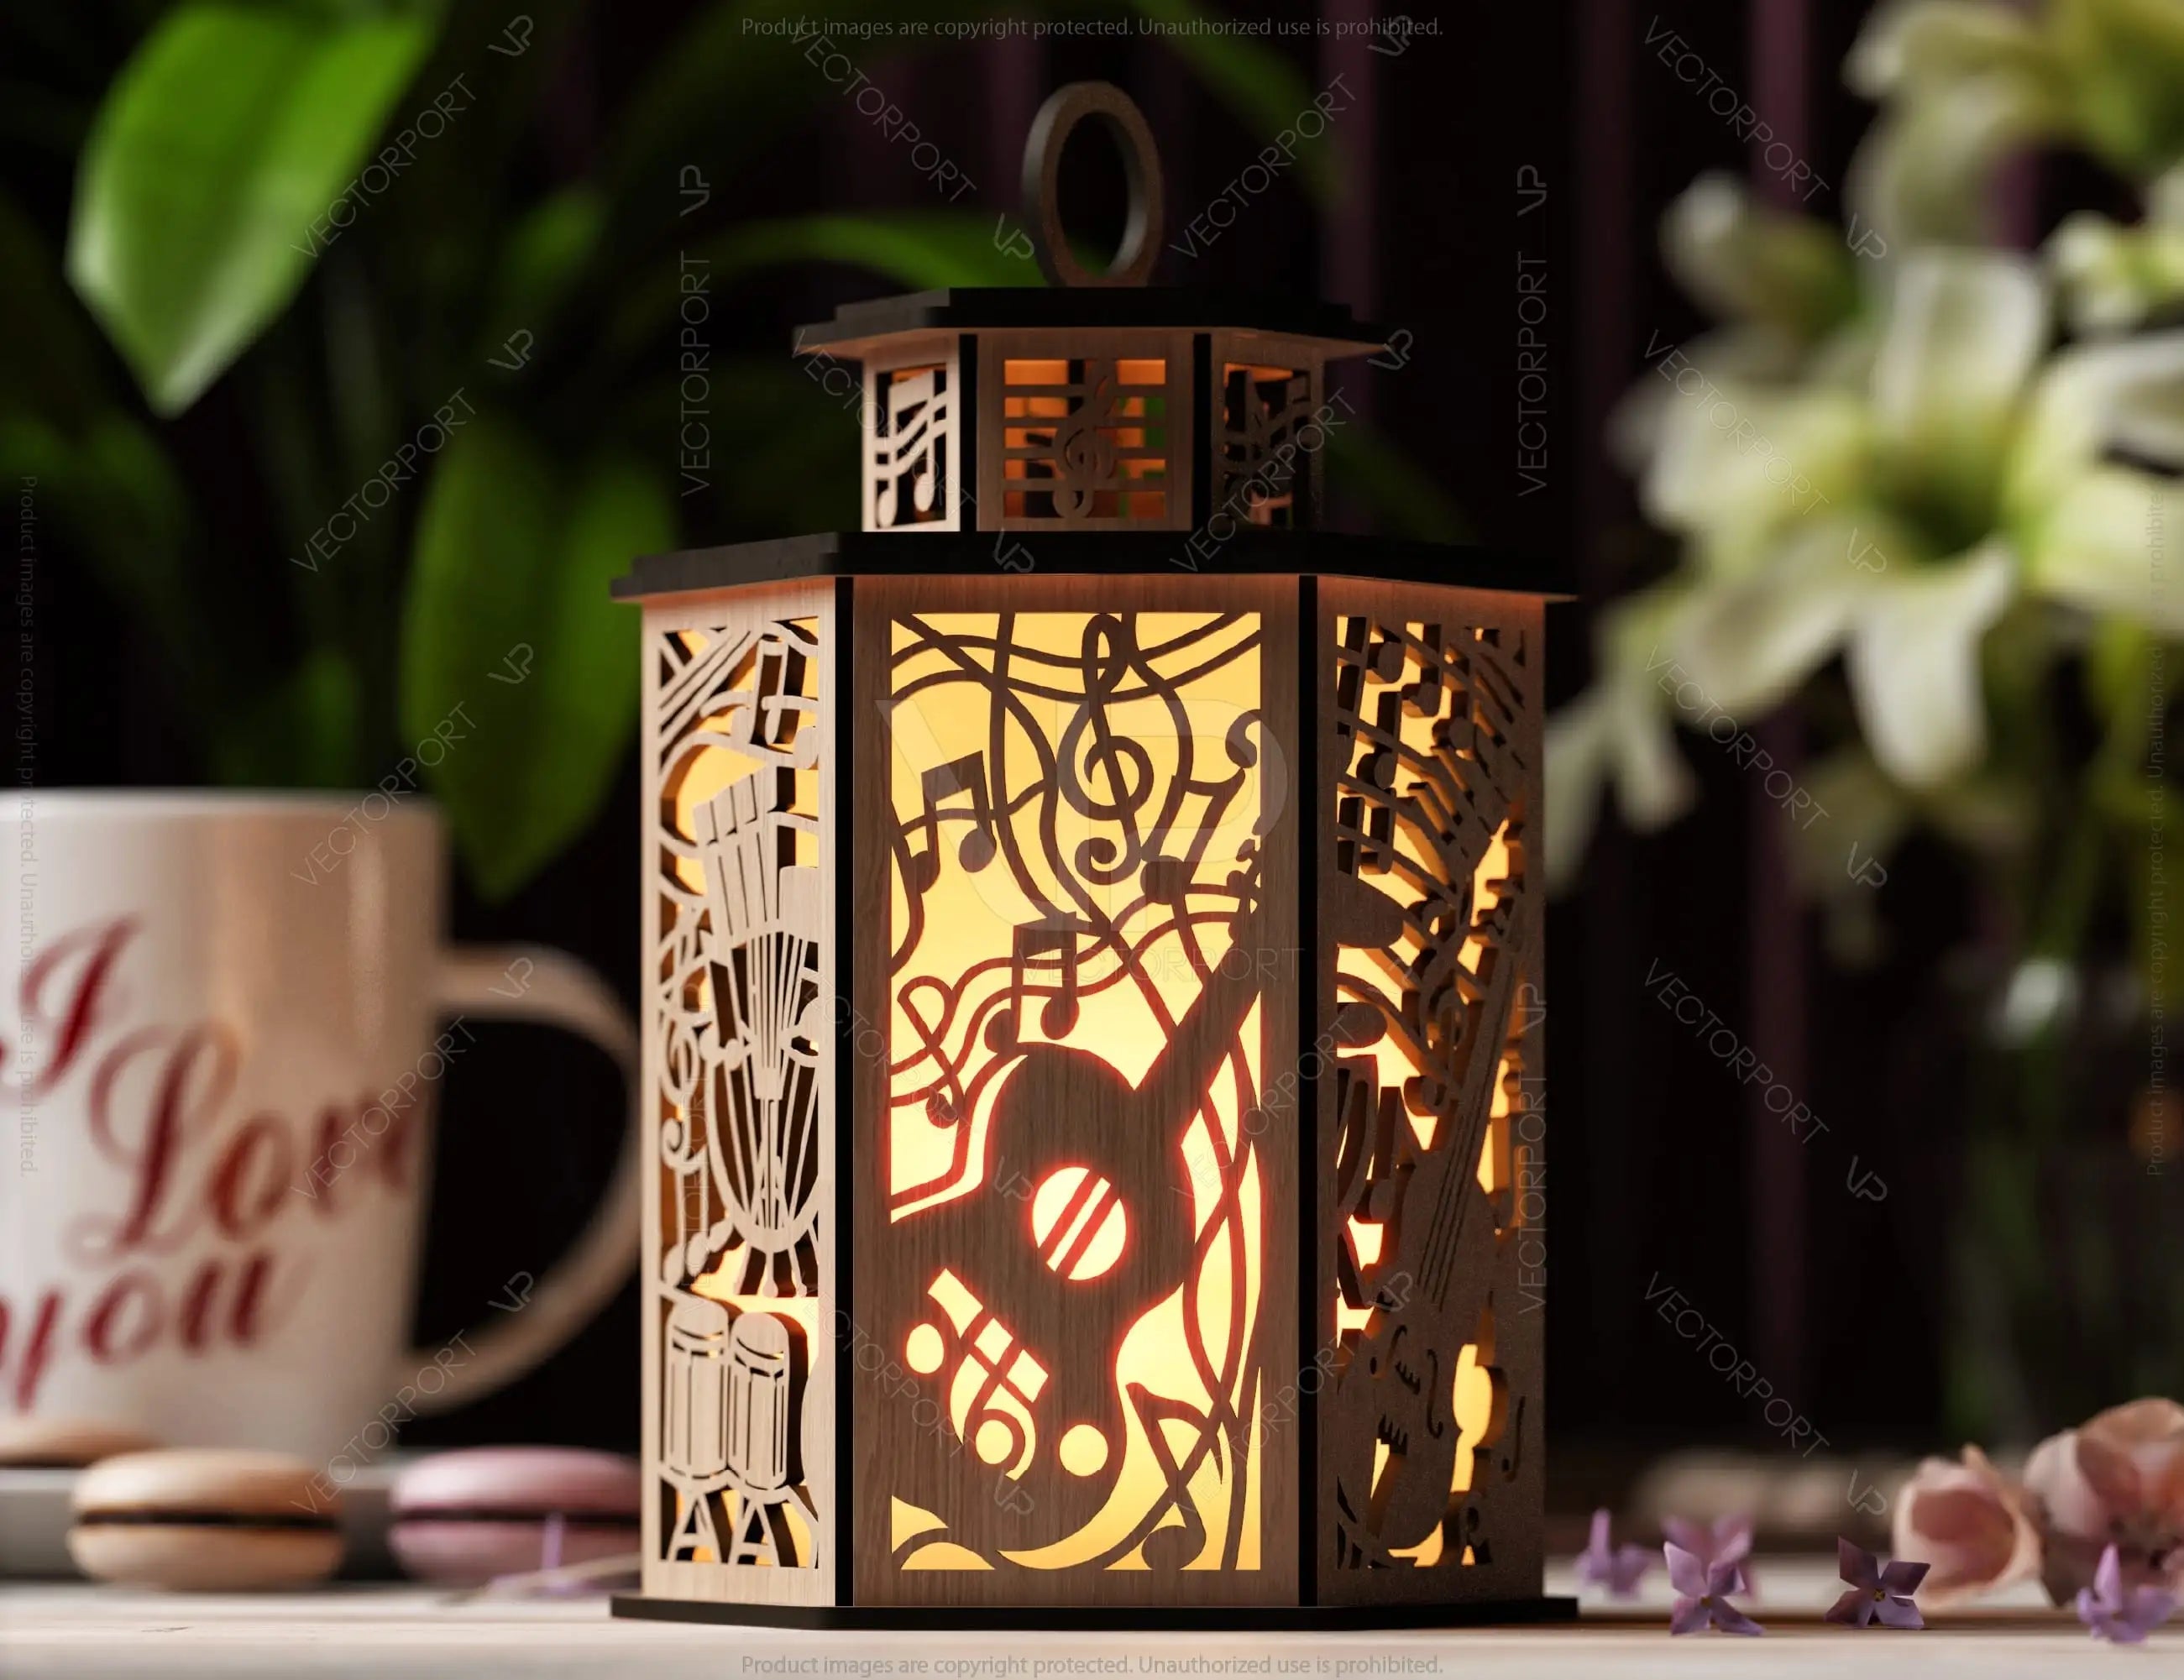 Symphony Lantern: Music Notes Laser Cut Tealight Candle Holder Night Light – Orchestra Design Musical Theme Lamp Digital Download |#U430|